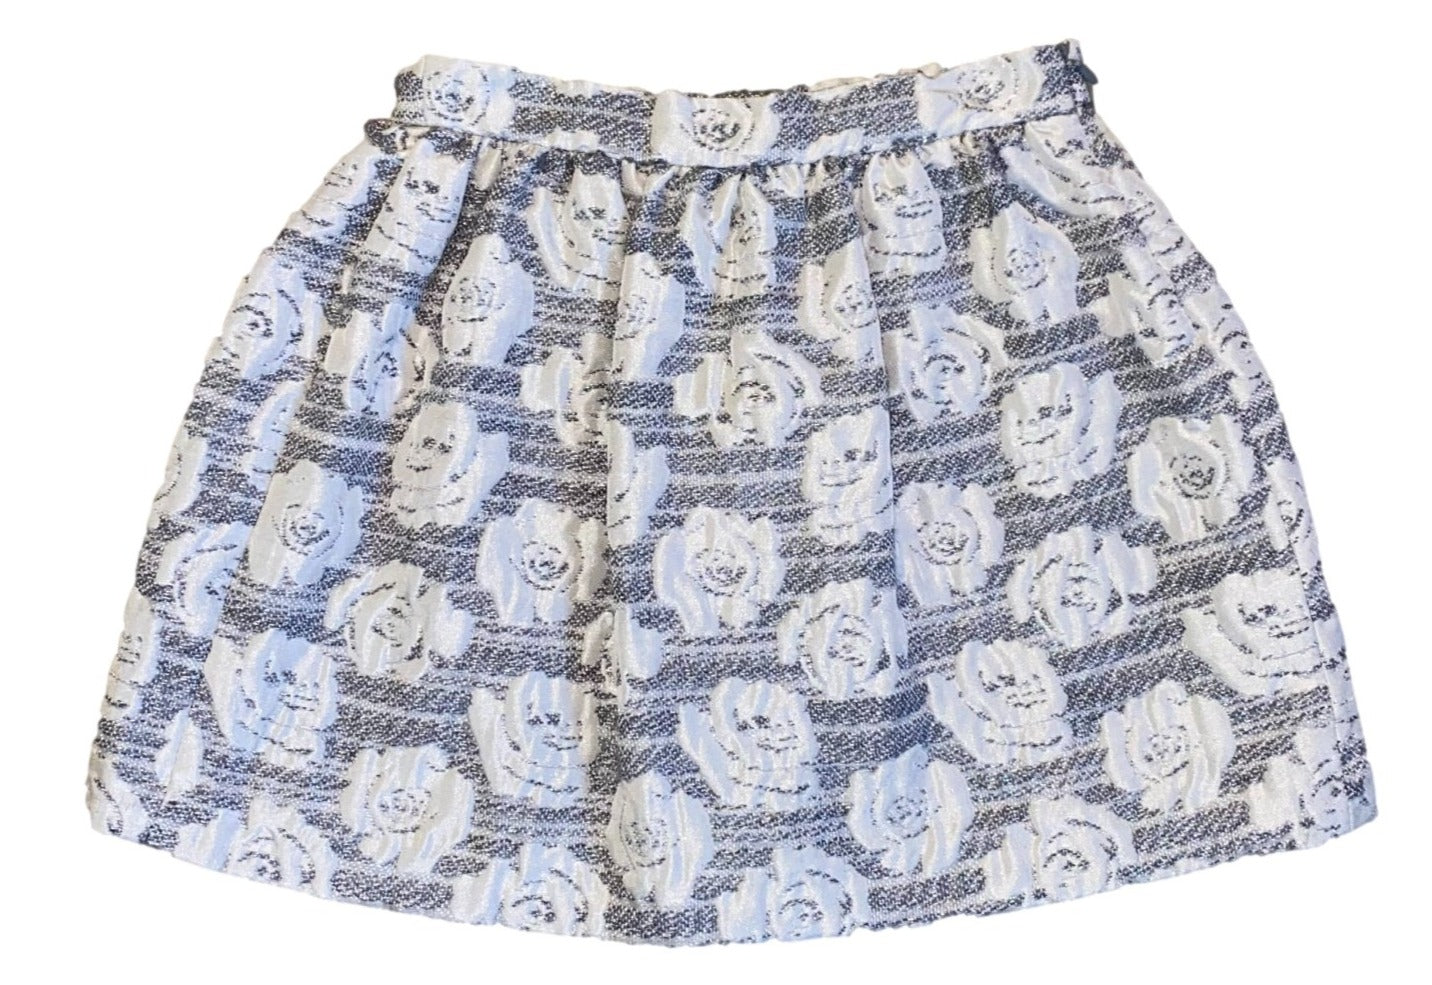 IG80N-24A-A Rosette printed skirt